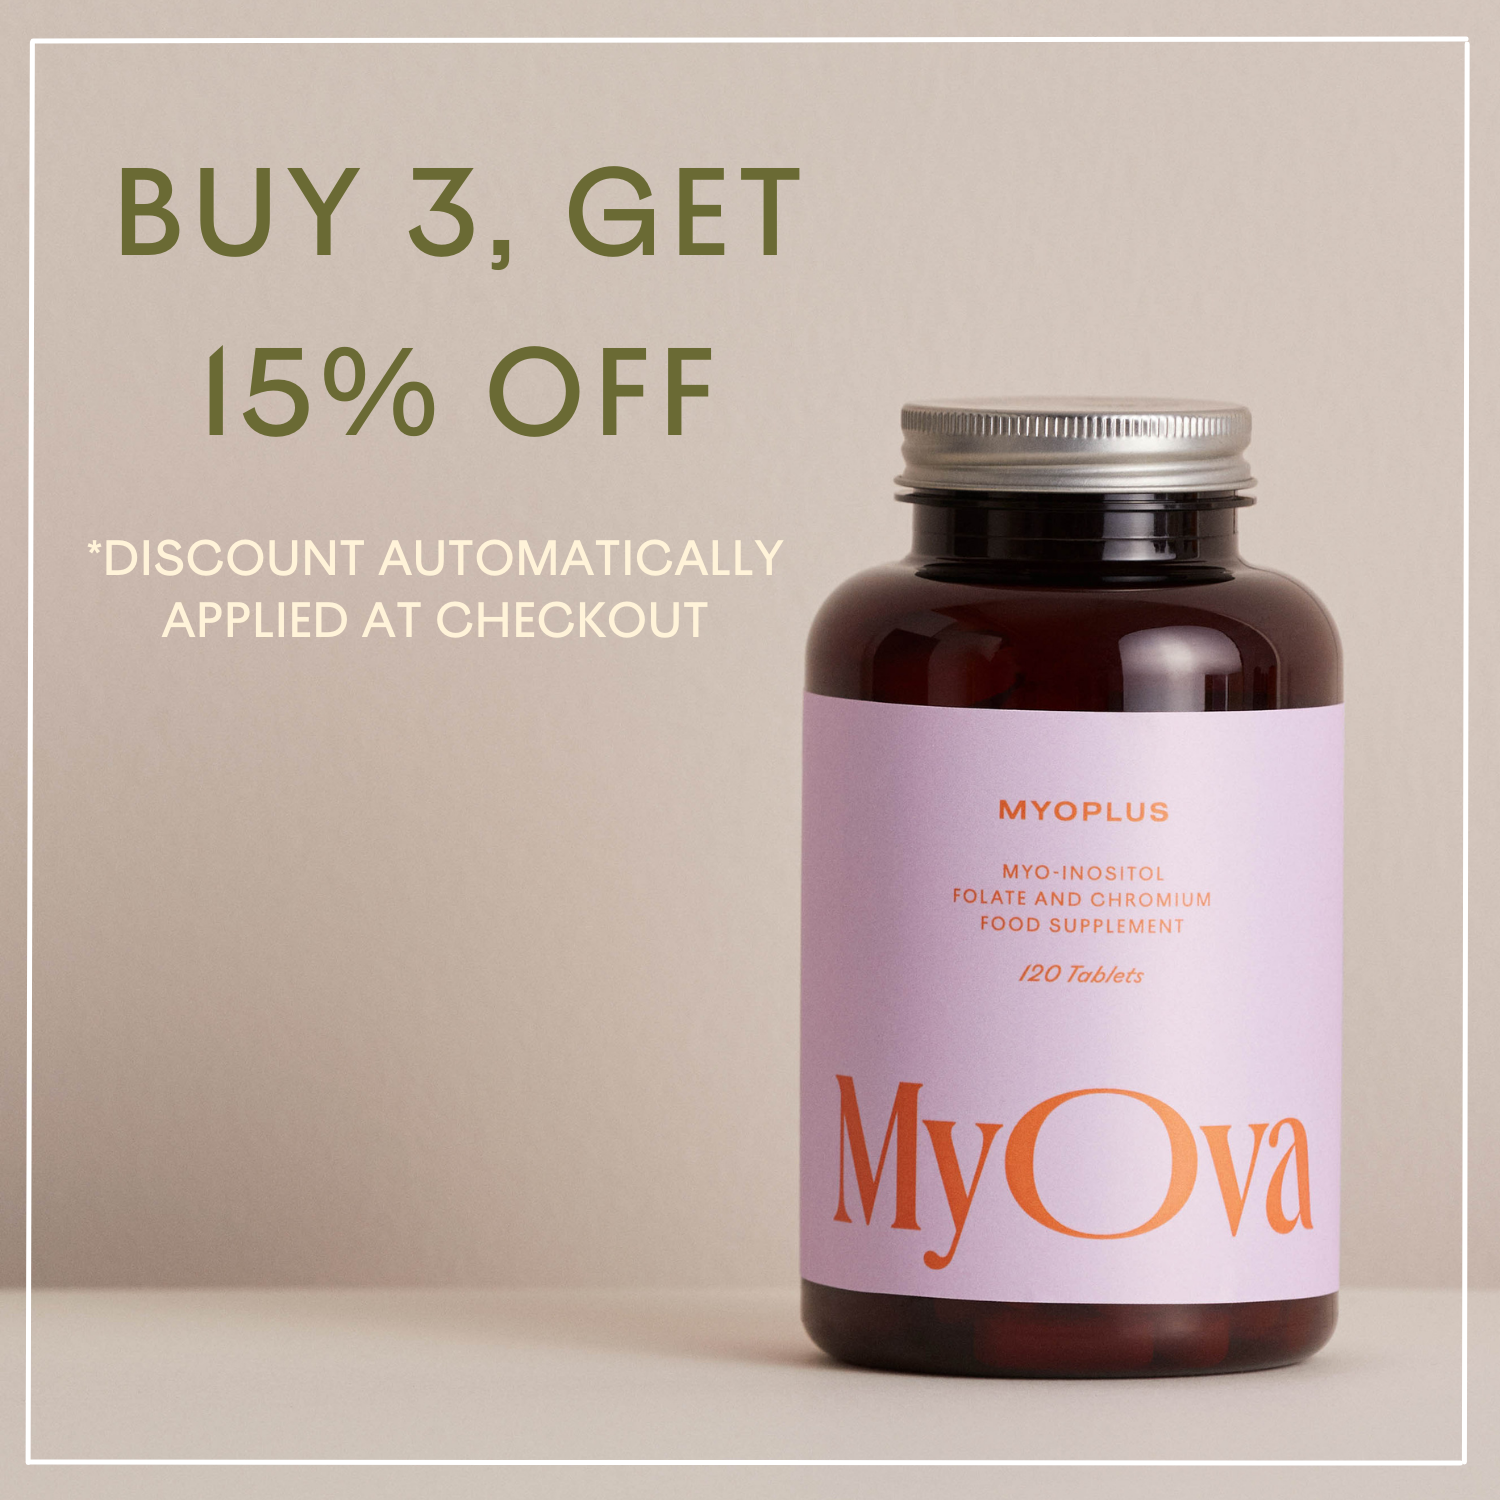 MyOva Myoplus - Buy 3, Get 15% Off